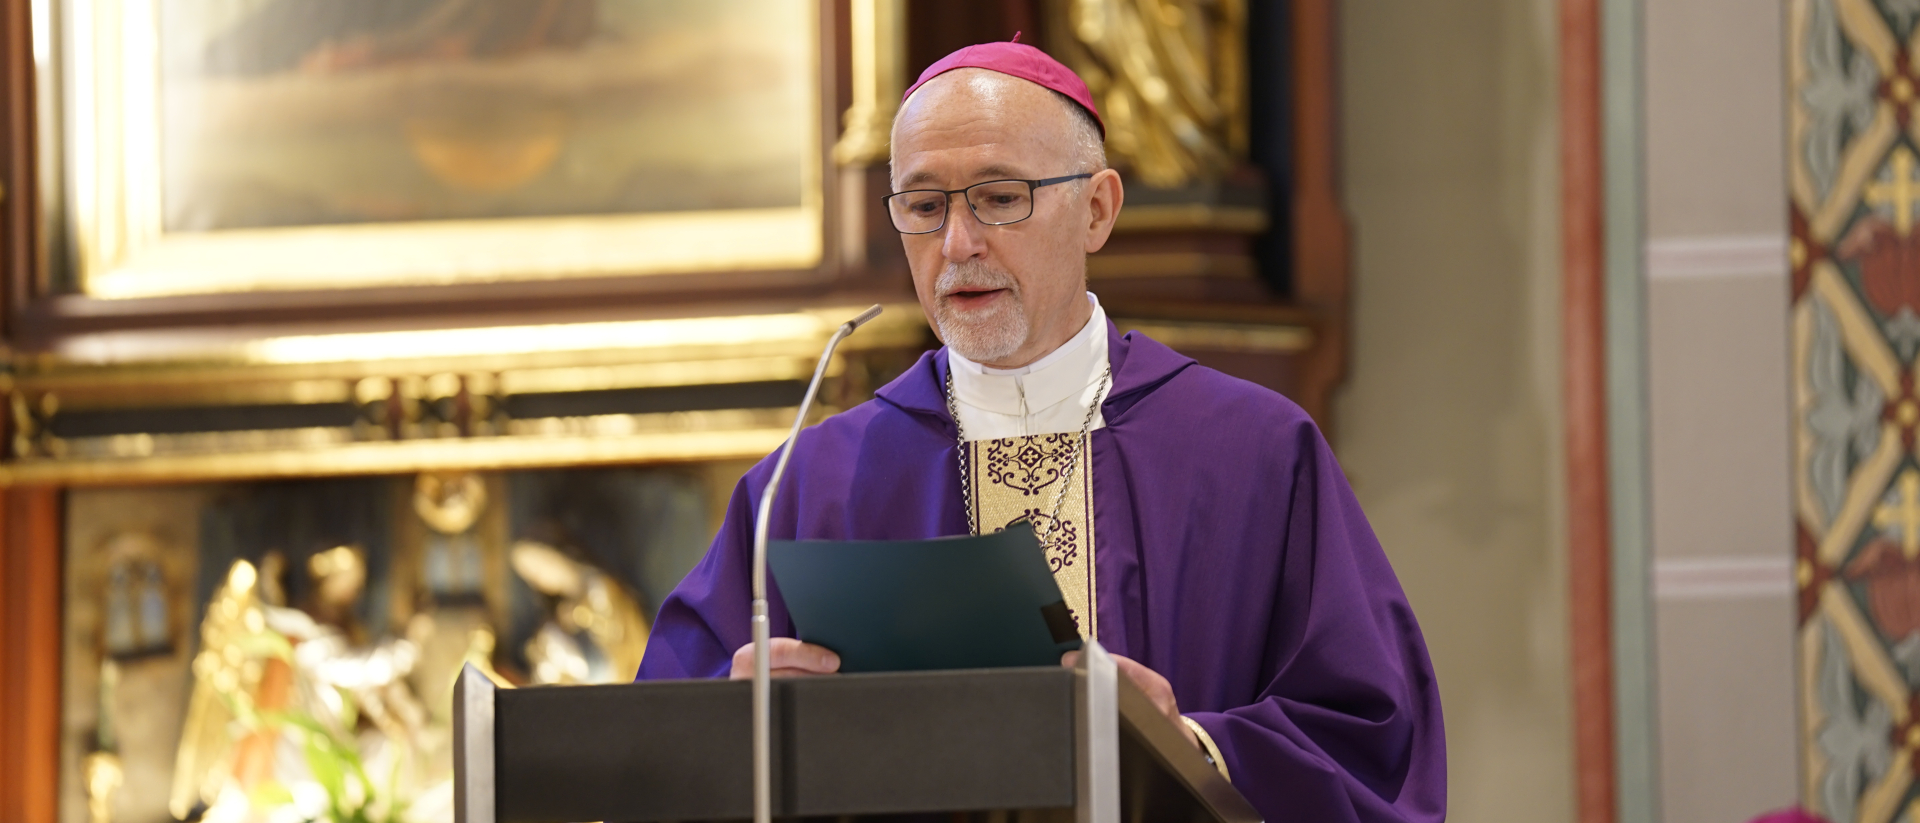 Nuntius Martin Krebs liest die Beileidsadresse von Kardinal Pietro Parolin